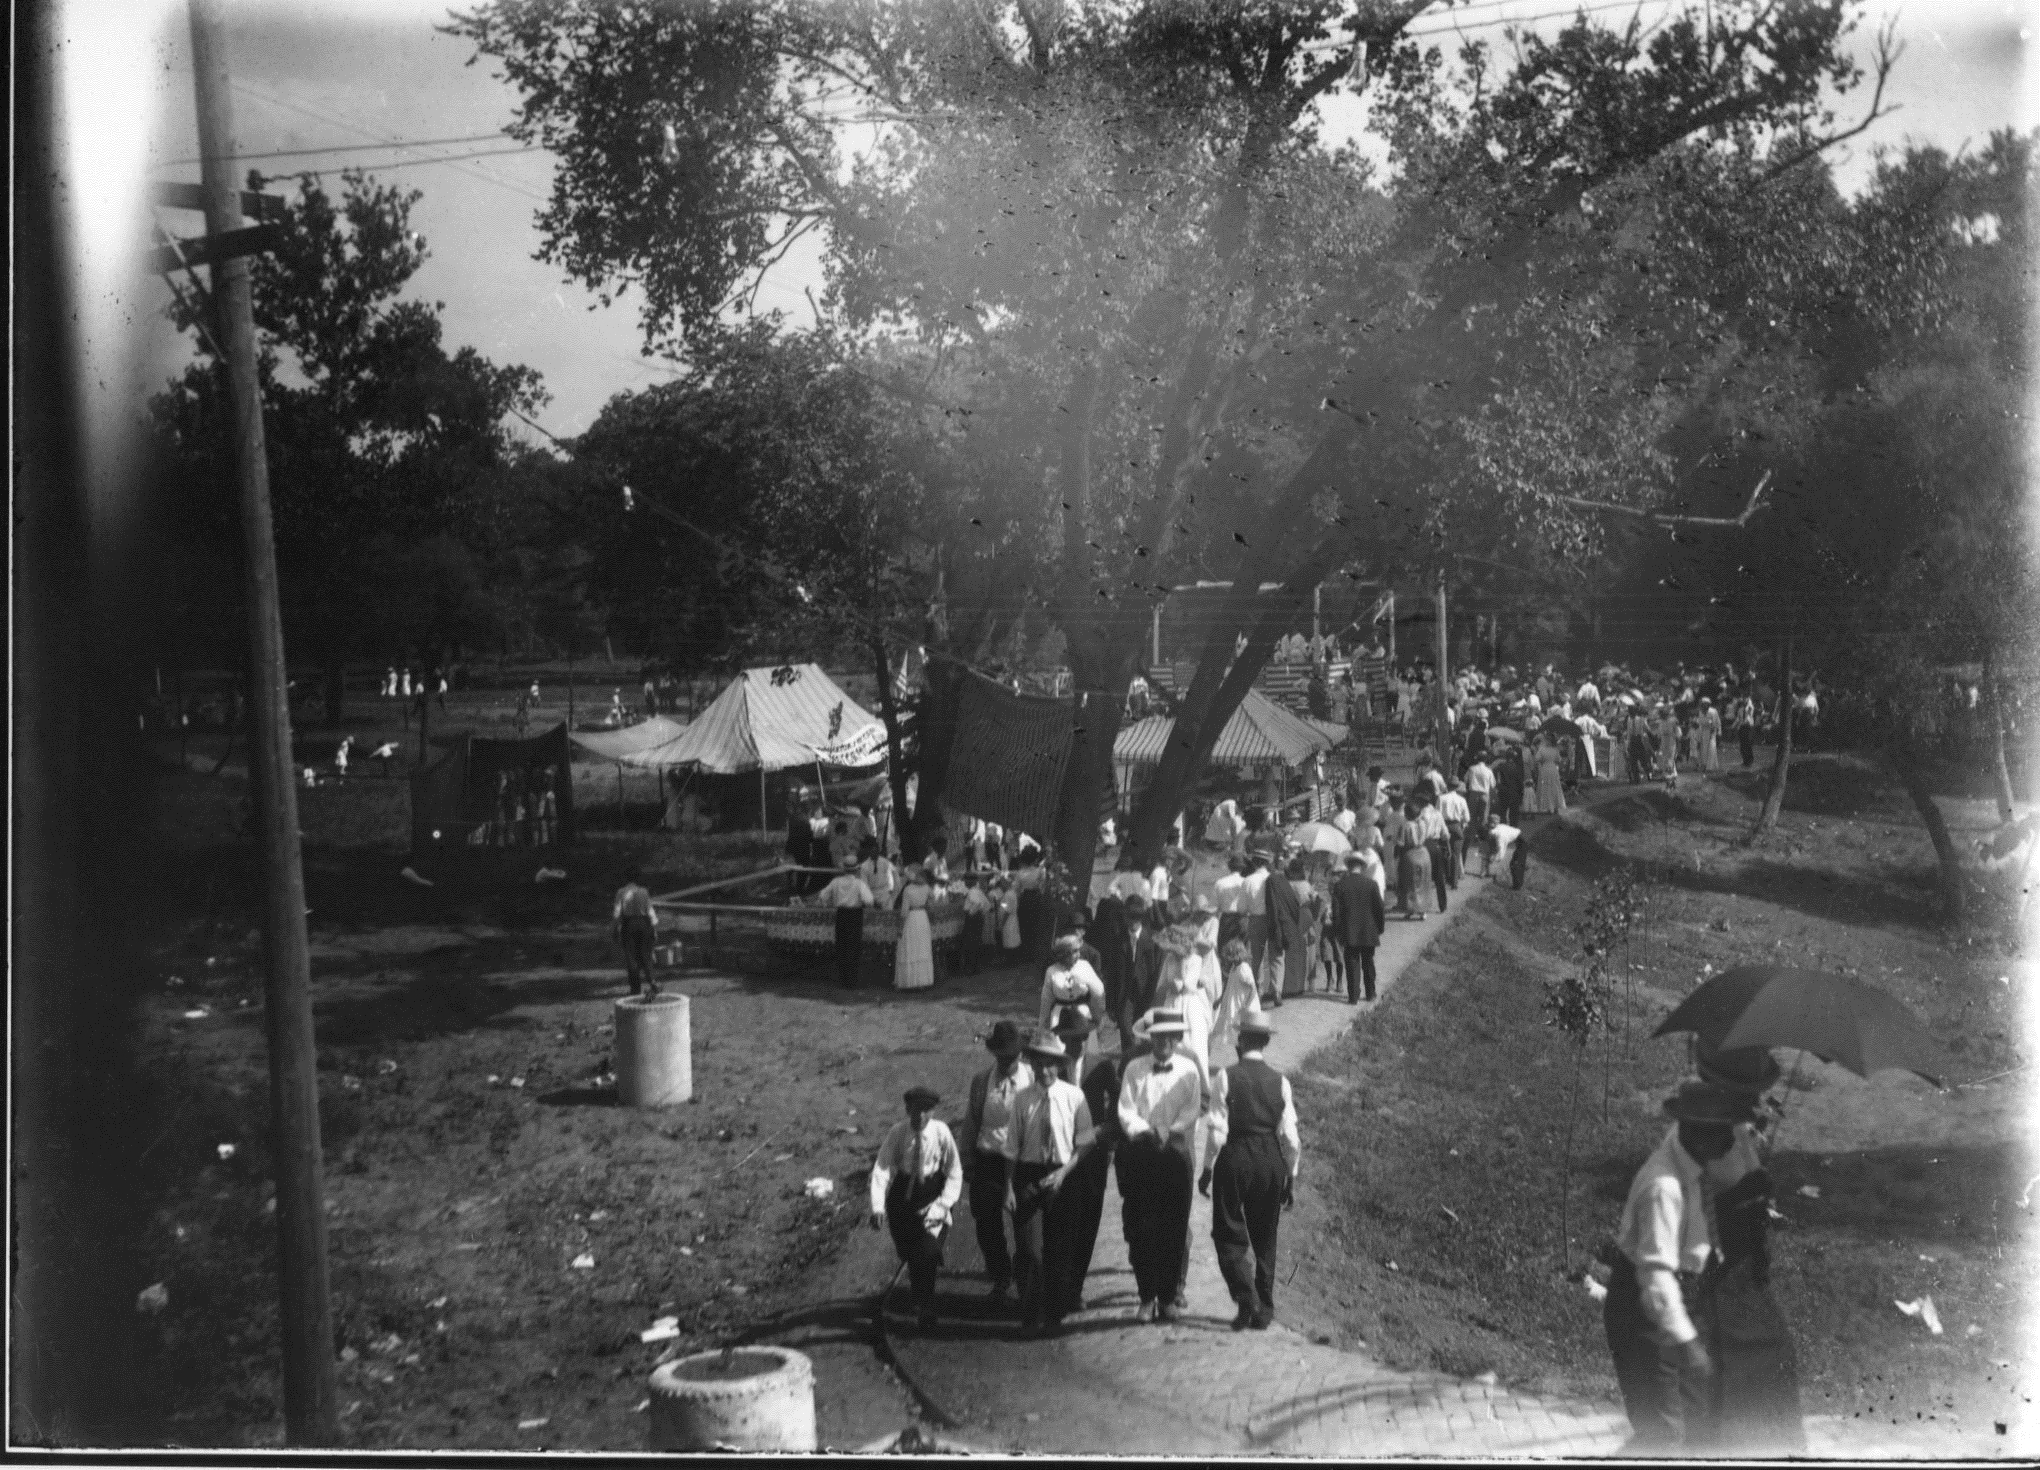 Community Event in Ash Park District circa 1910